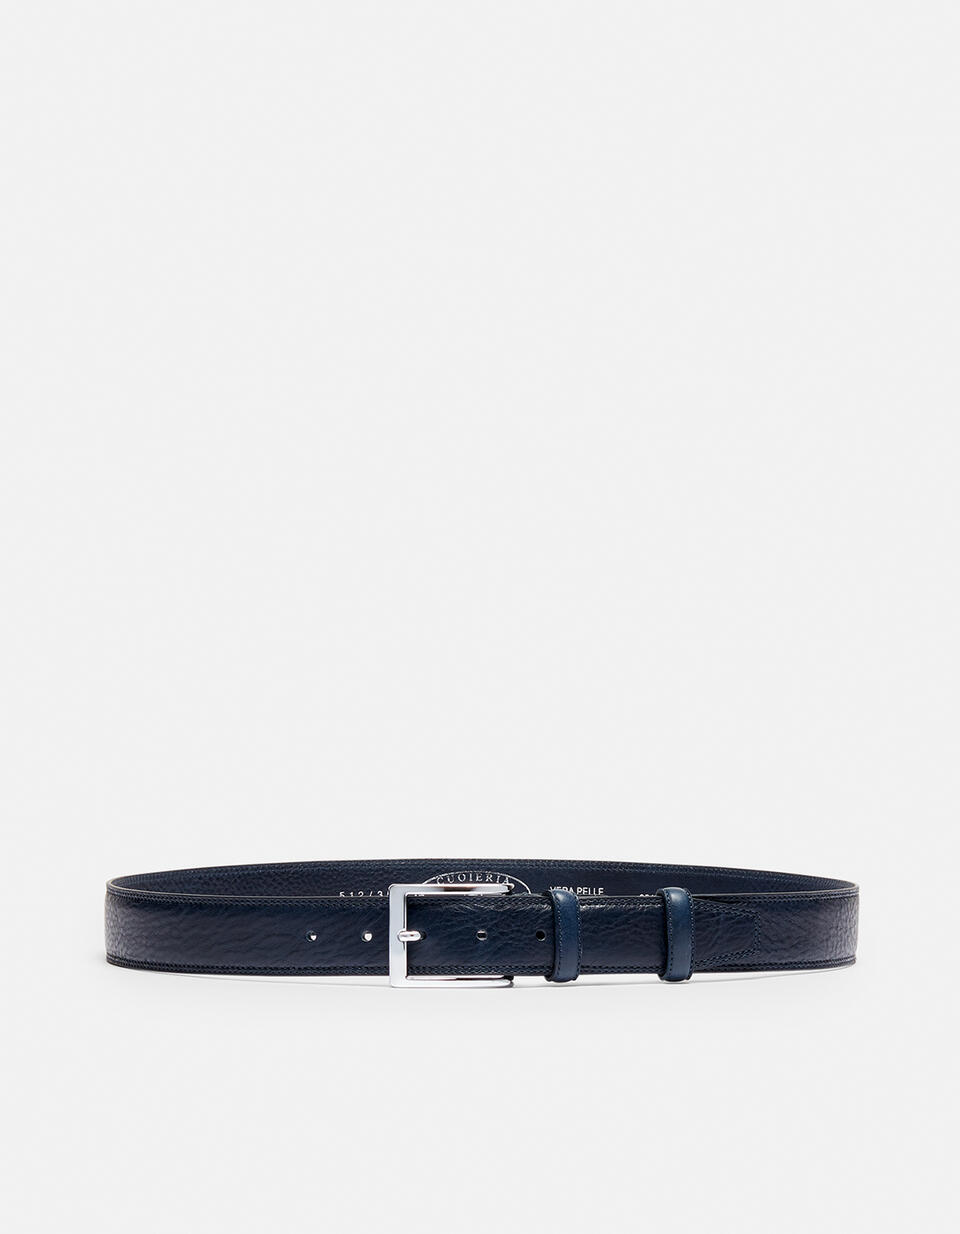 Cintura Elgante doppia cucitura 3,5cm Blu  - Cinture Uomo - Cinture - Cuoieria Fiorentina